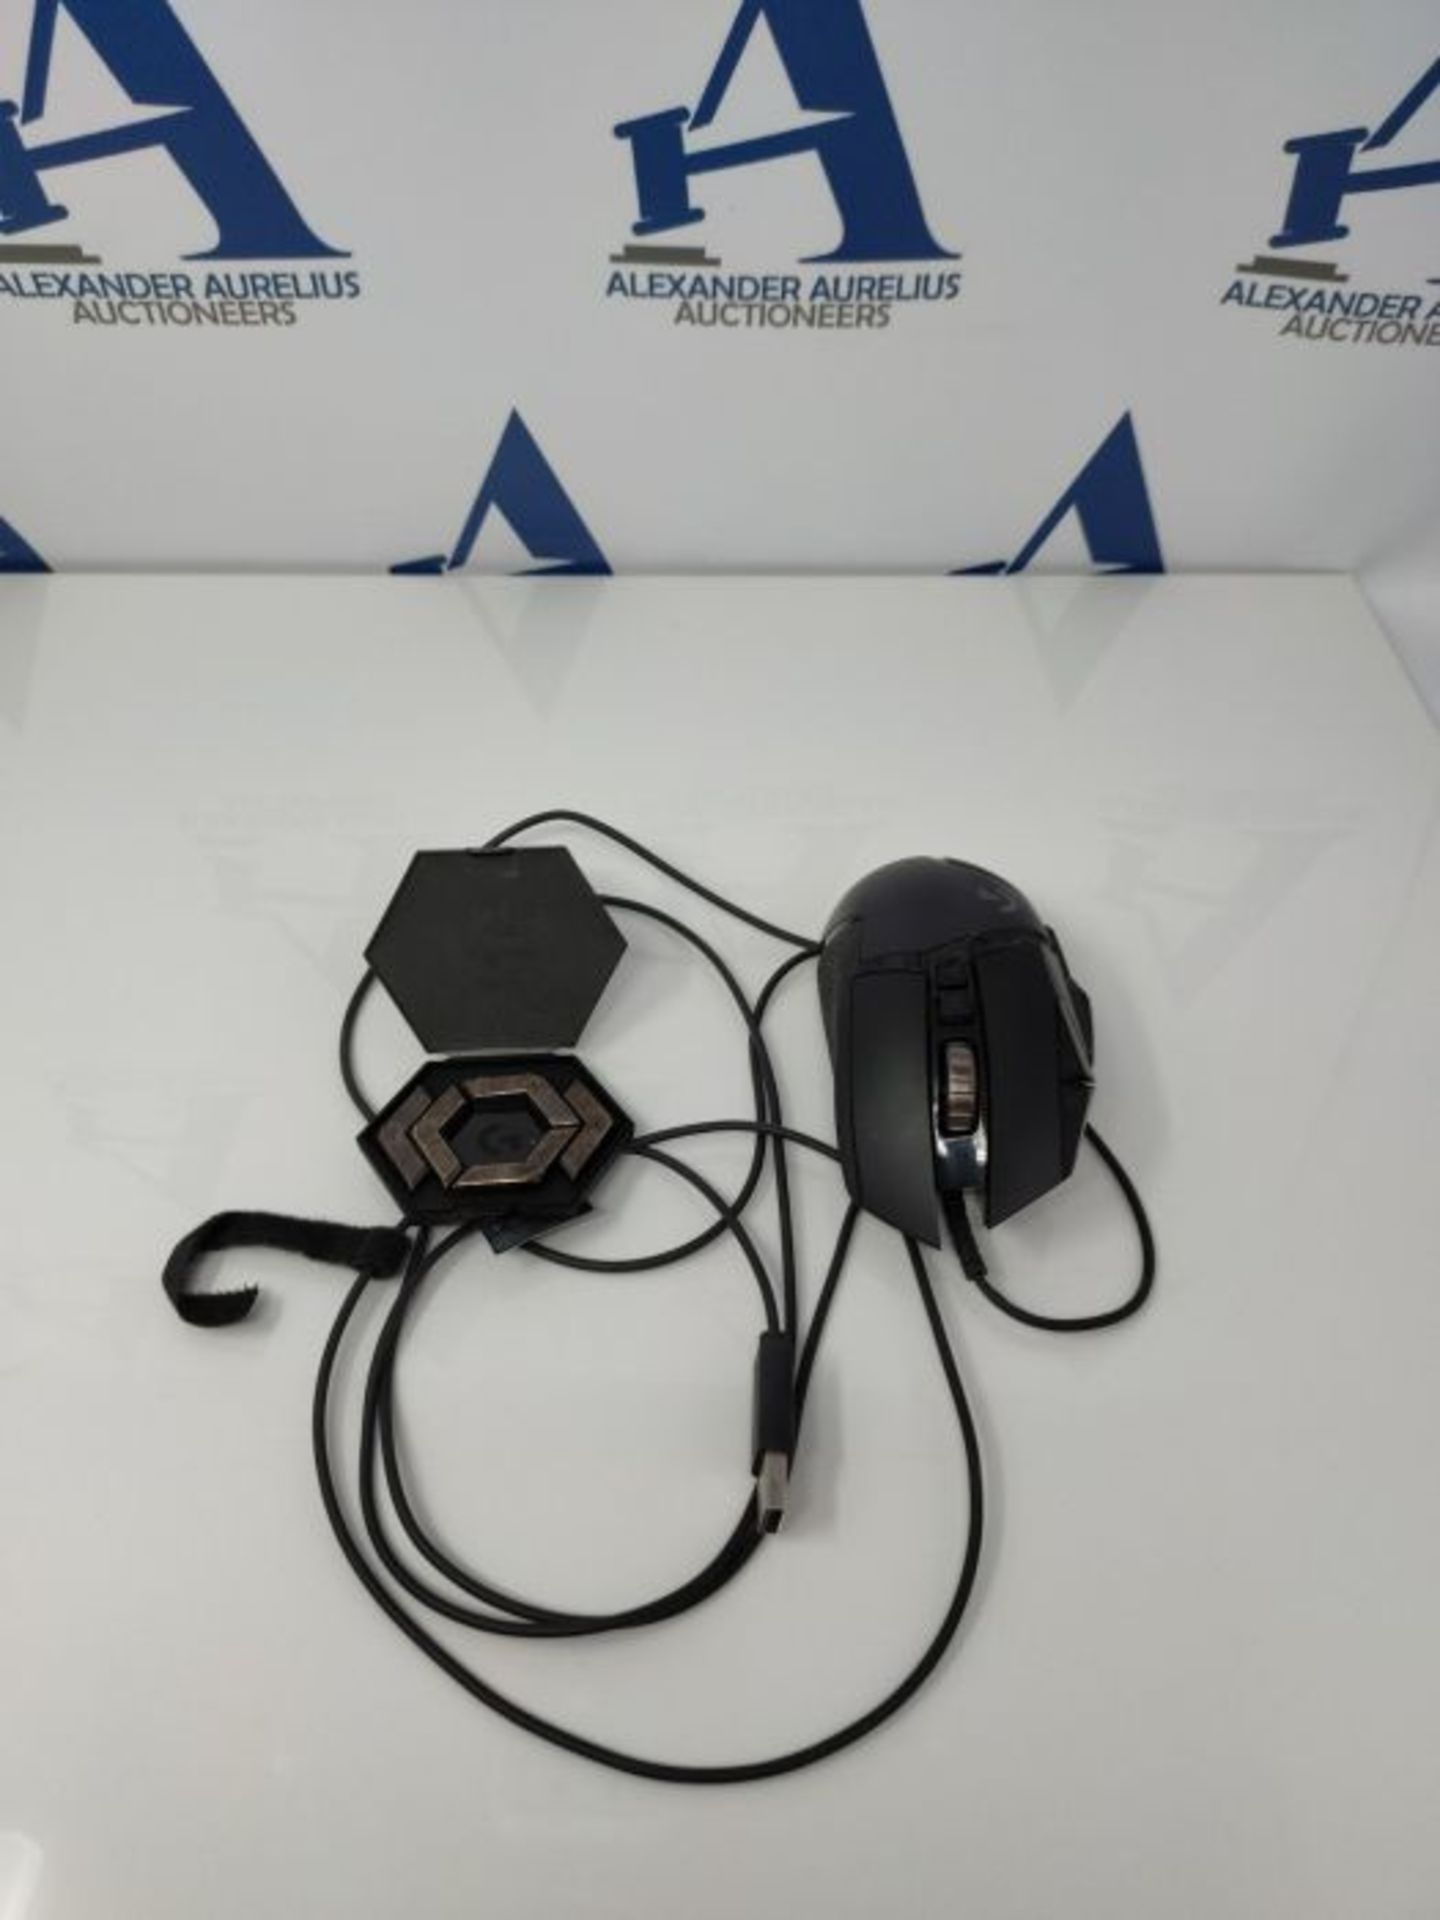 Logitech G502 HERO High Performance Wired Gaming Mouse, HERO 25K Sensor, 25,600 DPI, R - Image 3 of 3